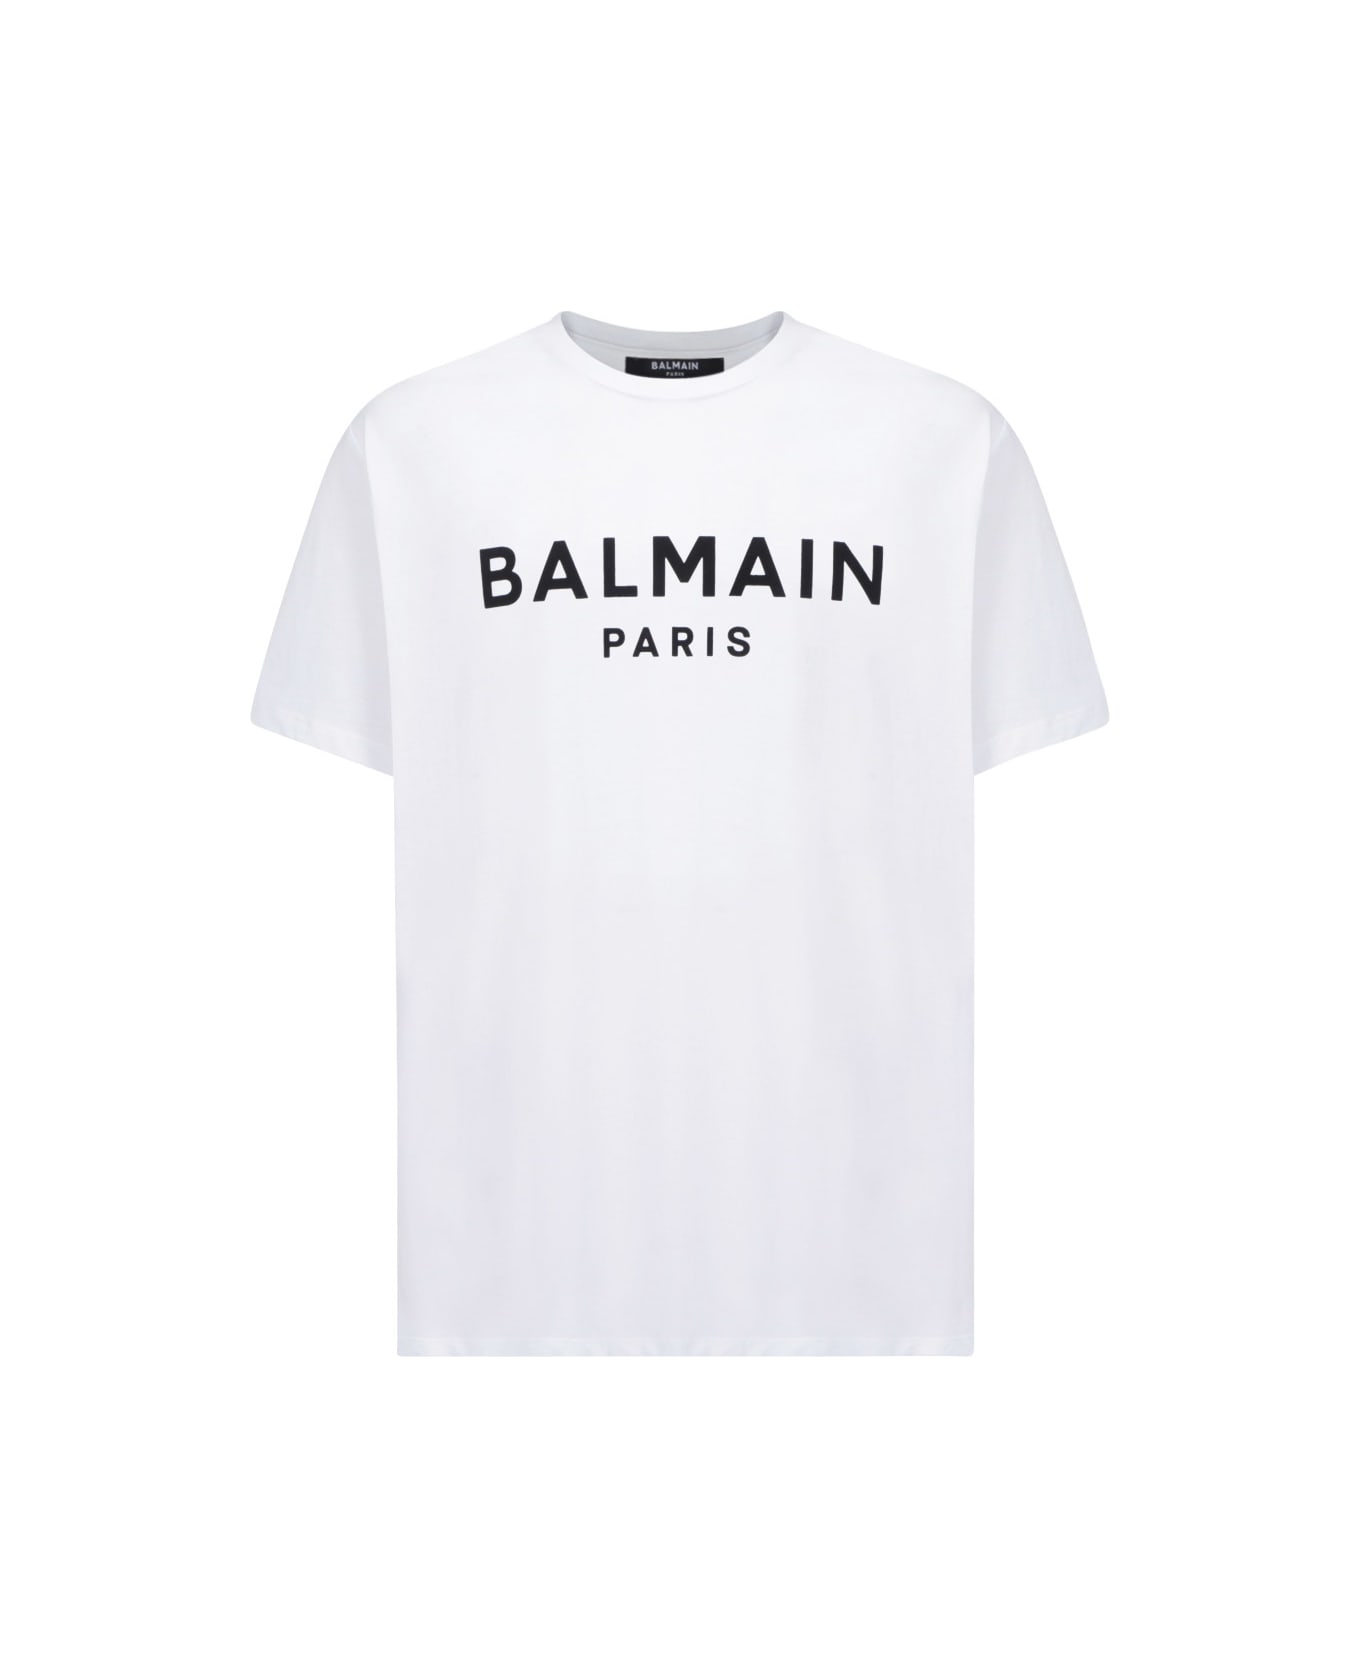 Balmain T-shirt - Blanc/noir